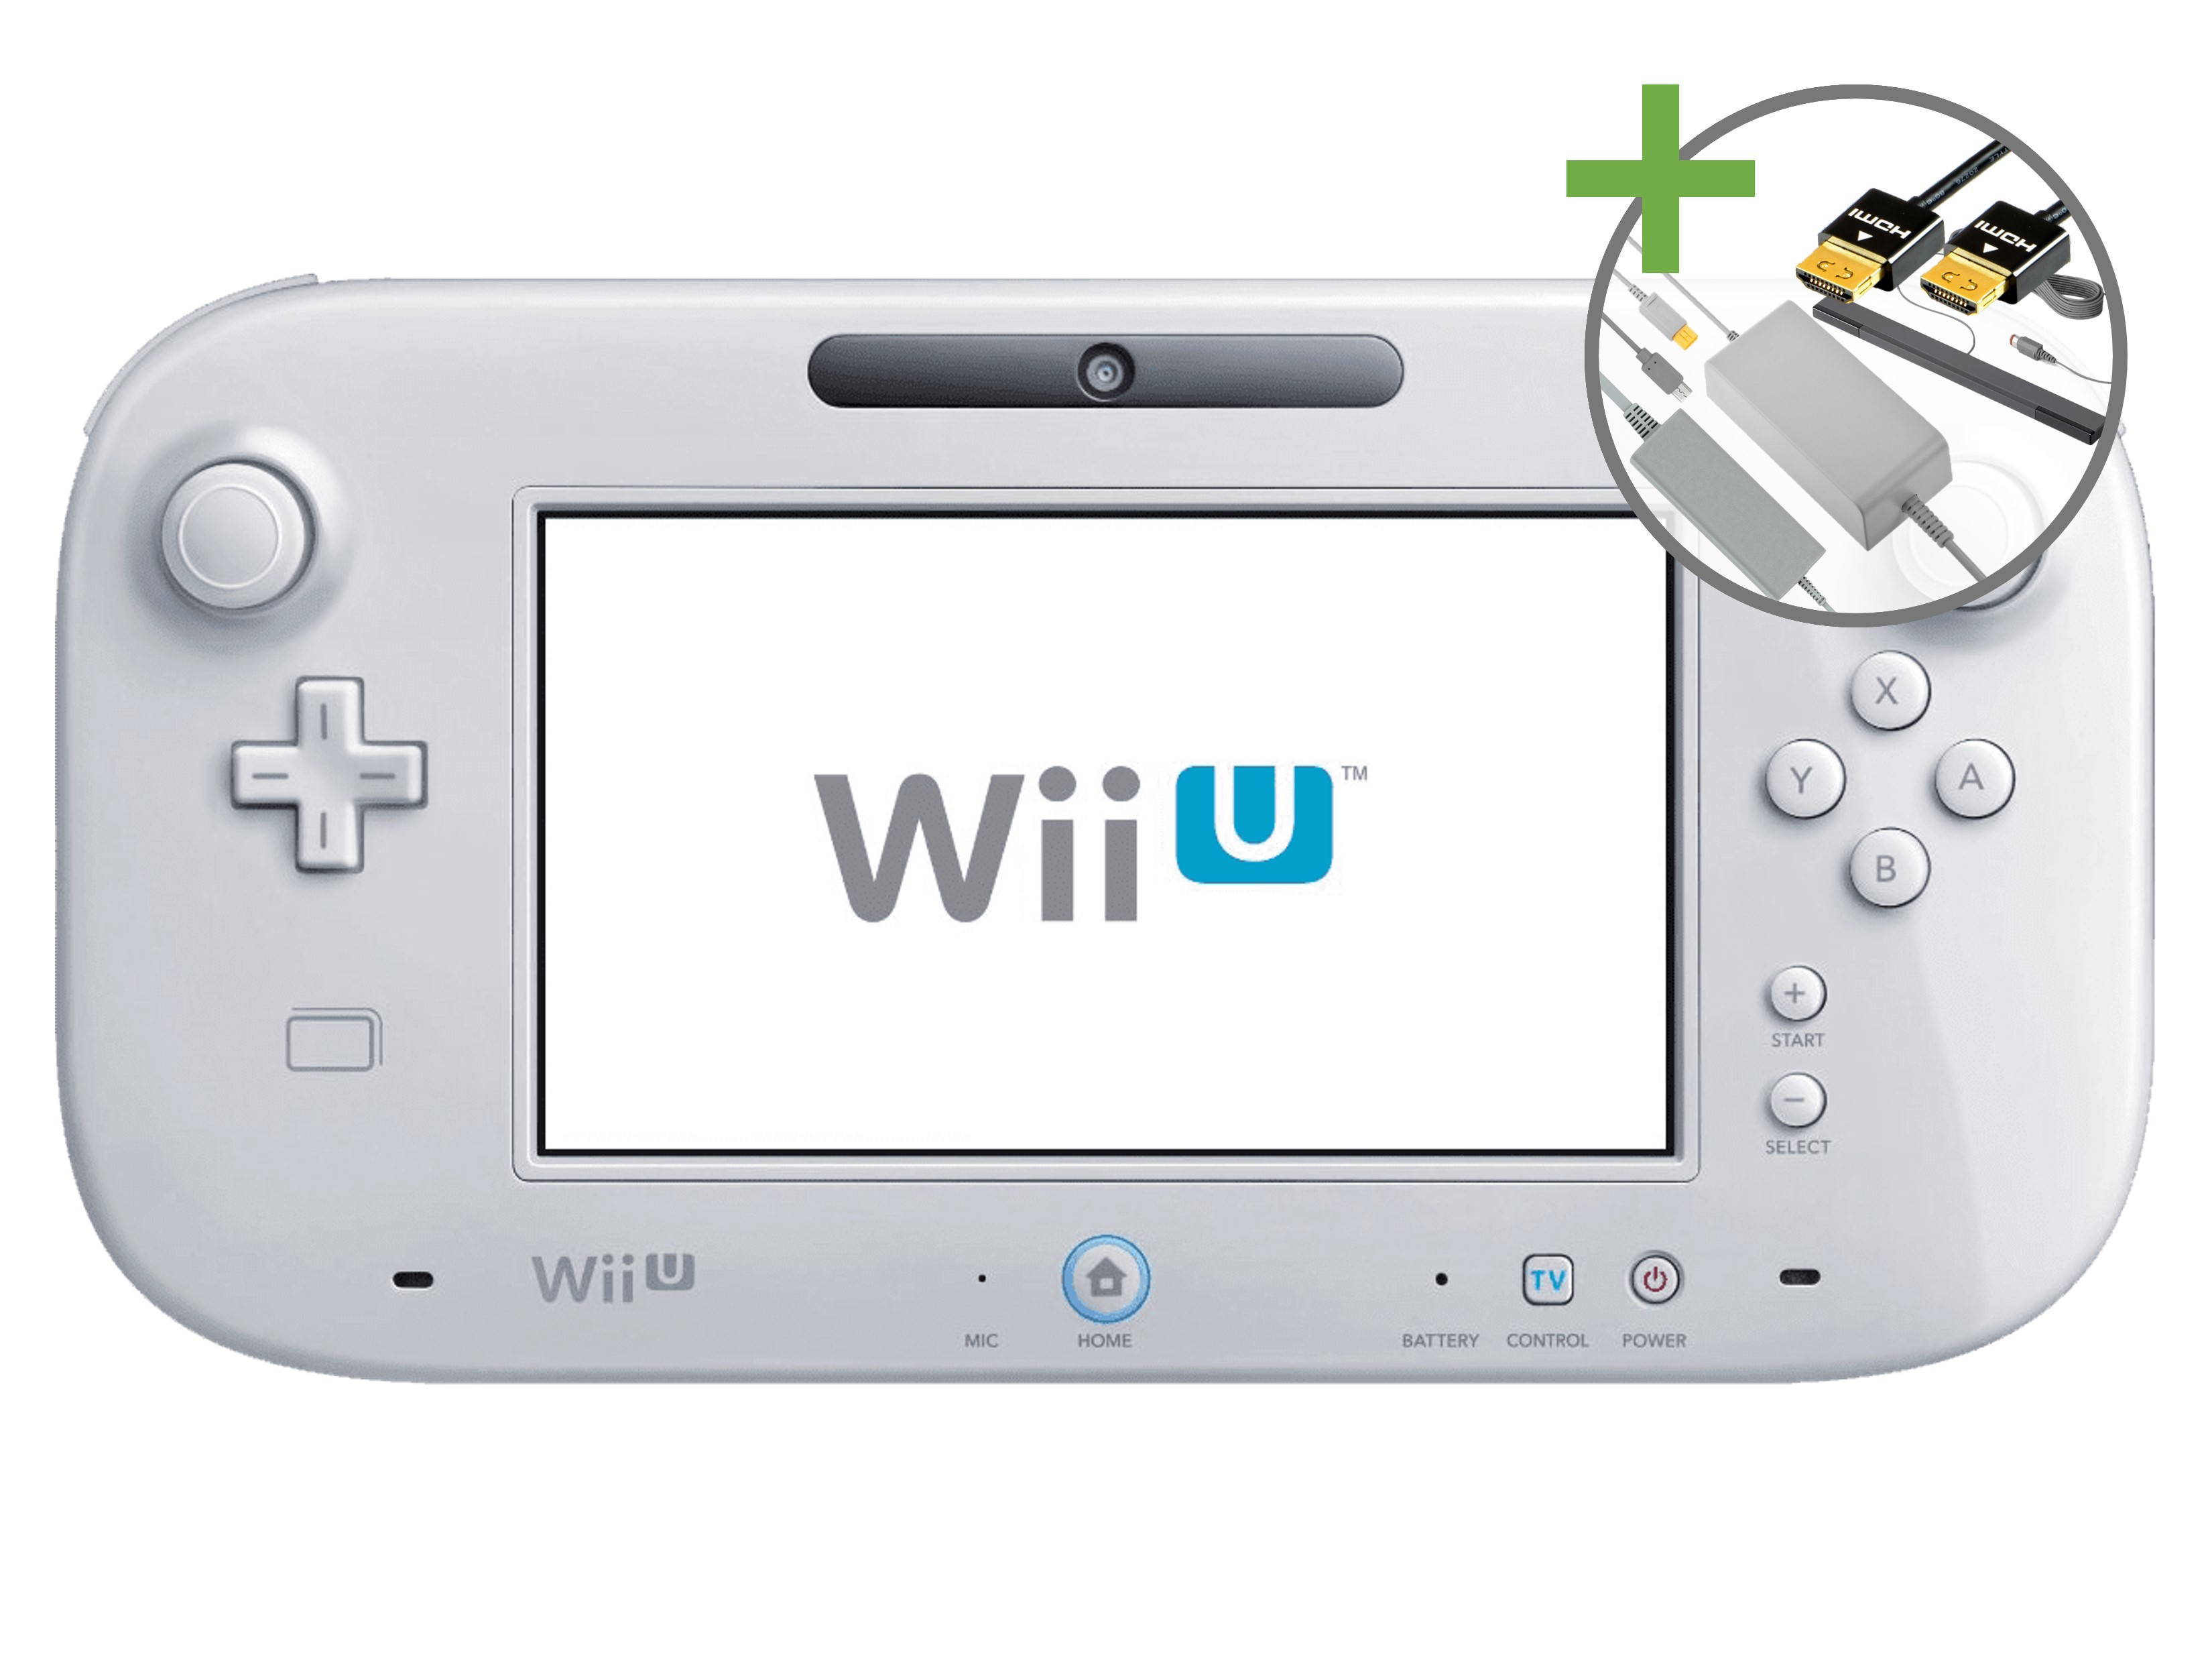 Nintendo Wii U Starter Pack - Basic White Pack Edition [Complete] - Wii U Hardware - 3